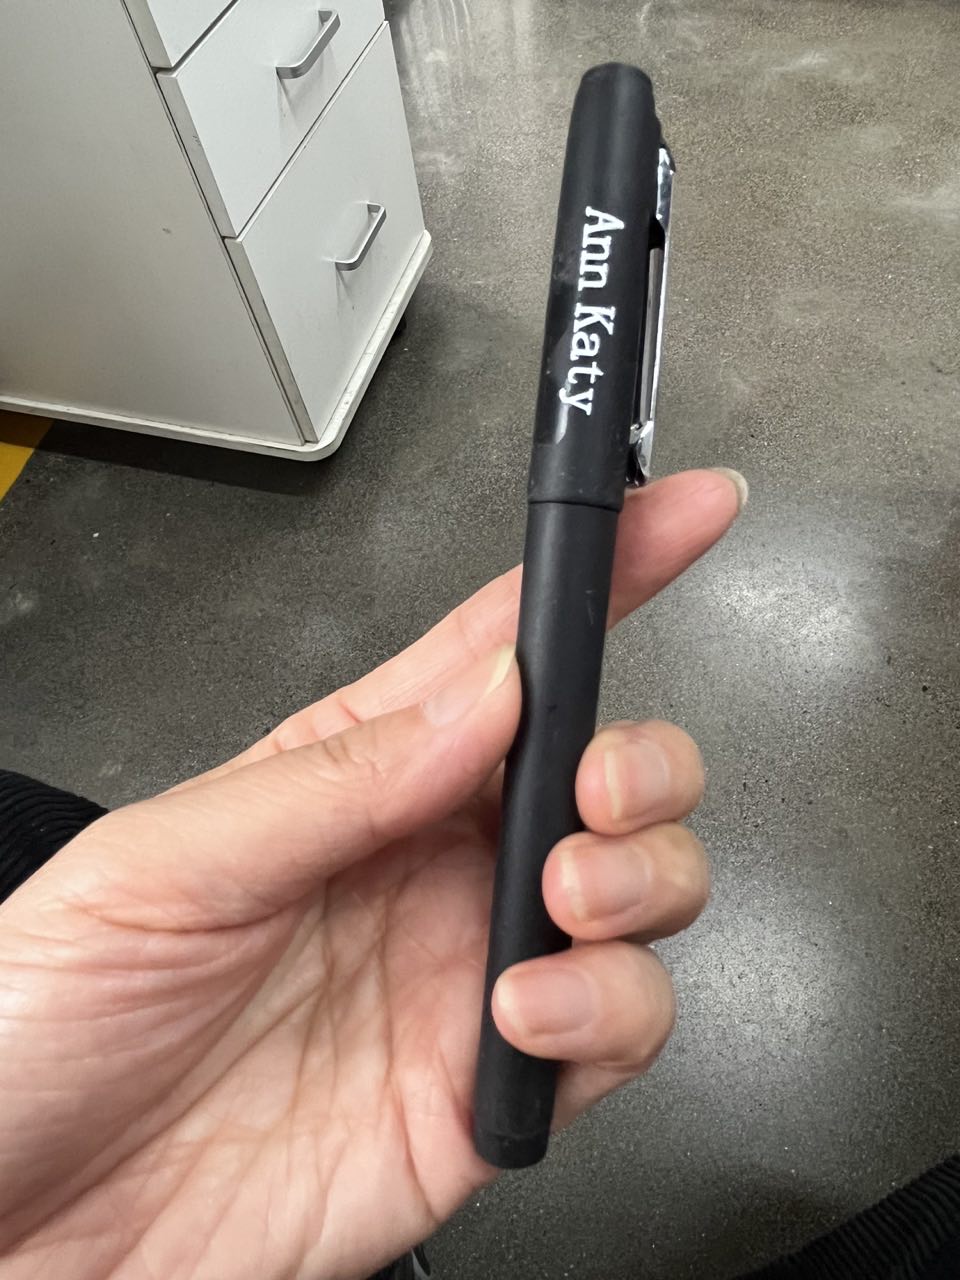 Ann Katy Color gel pen 0.5 mm color refill black press plastic signature pen gift pen office water-based pen stationery pen